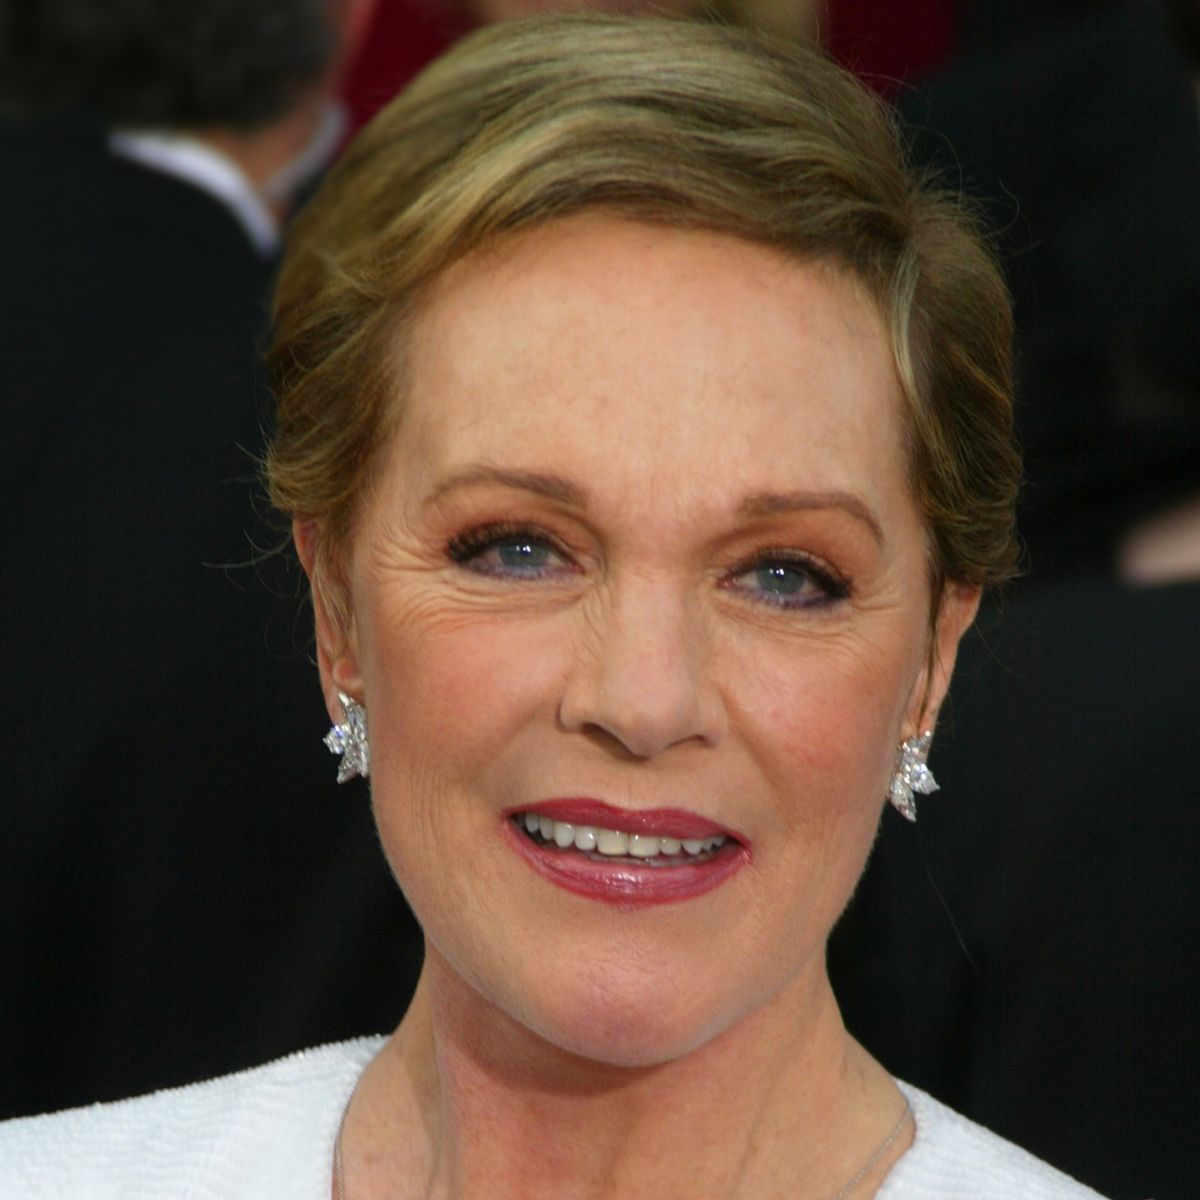 Julie Andrews photo via Getty Imagess